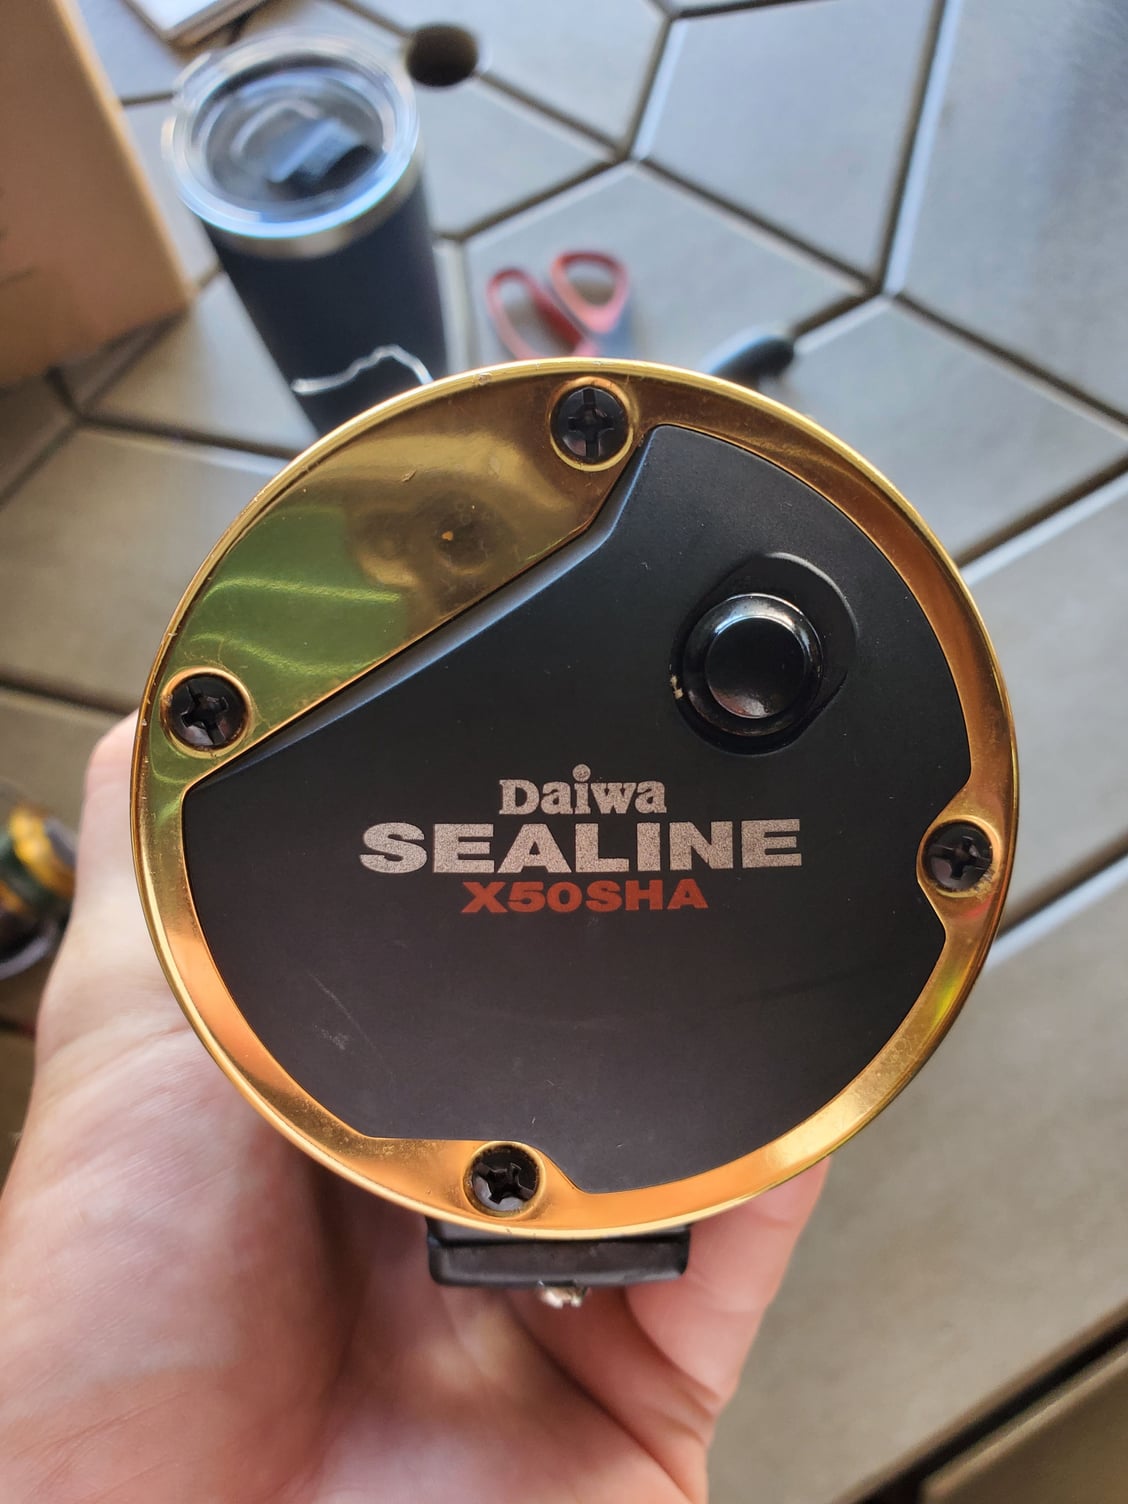 Daiwa Sealine Reel